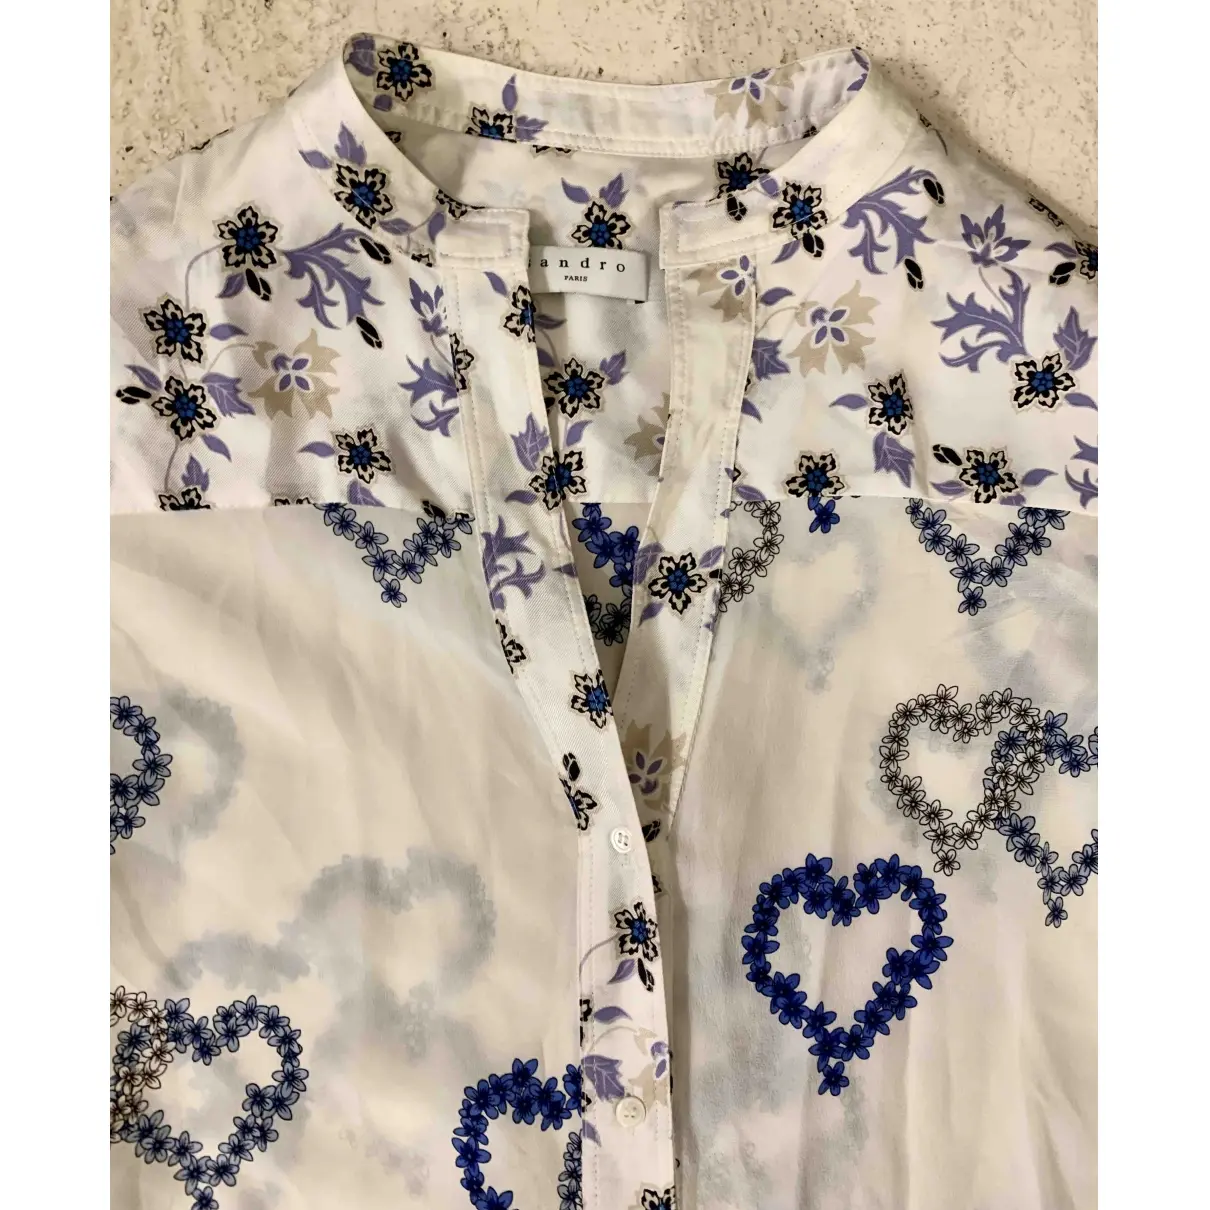 Sandro Spring Summer 2019 silk mid-length dress for sale